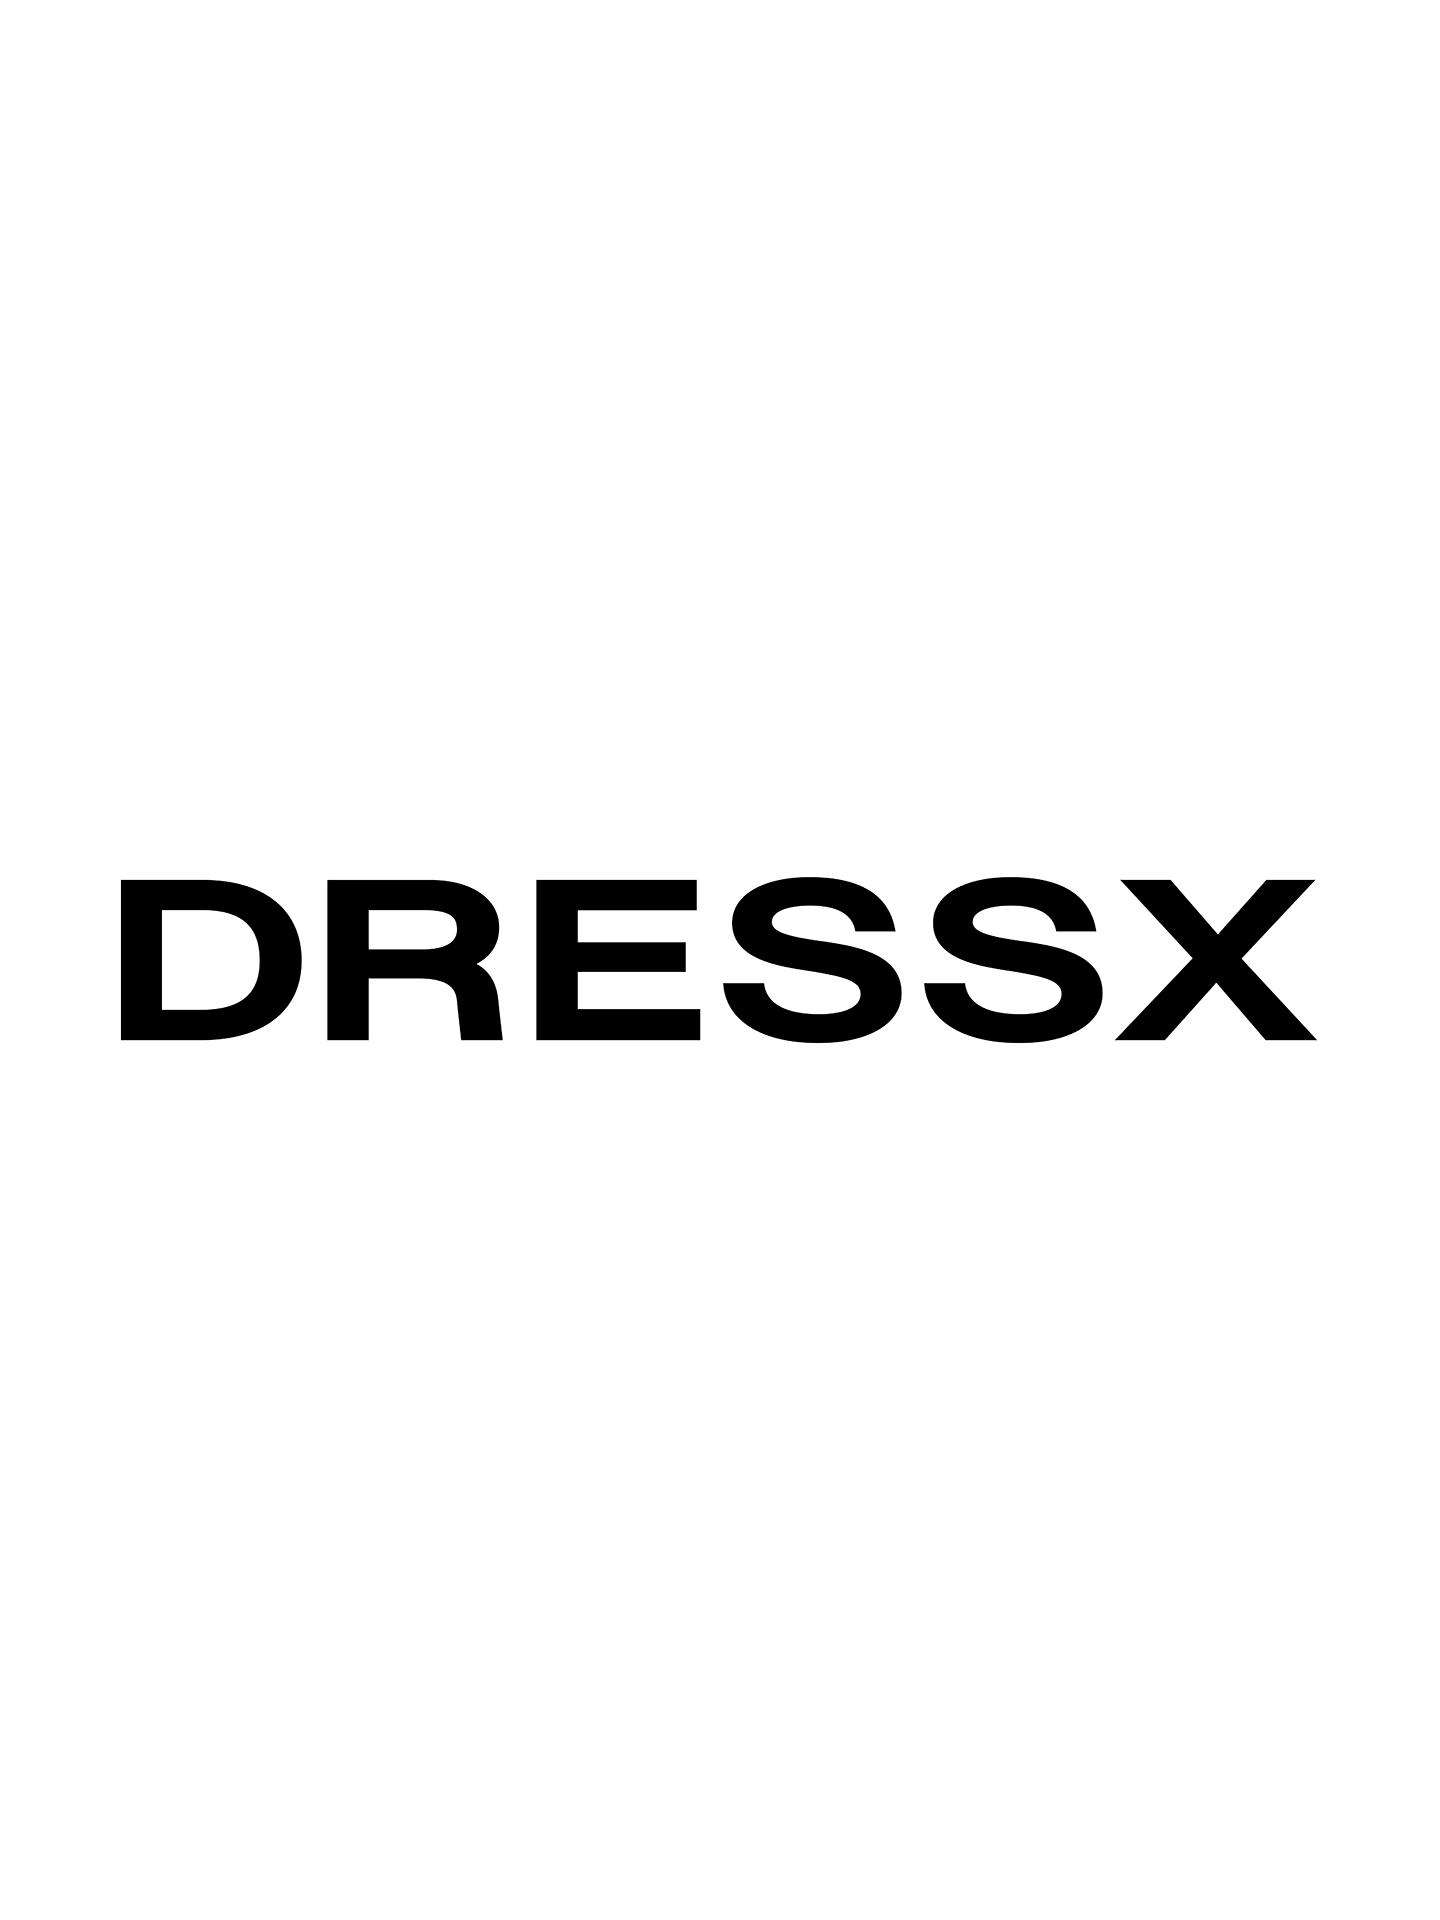 Jean Paul Gaultier Bodycon Dress by DRESSX